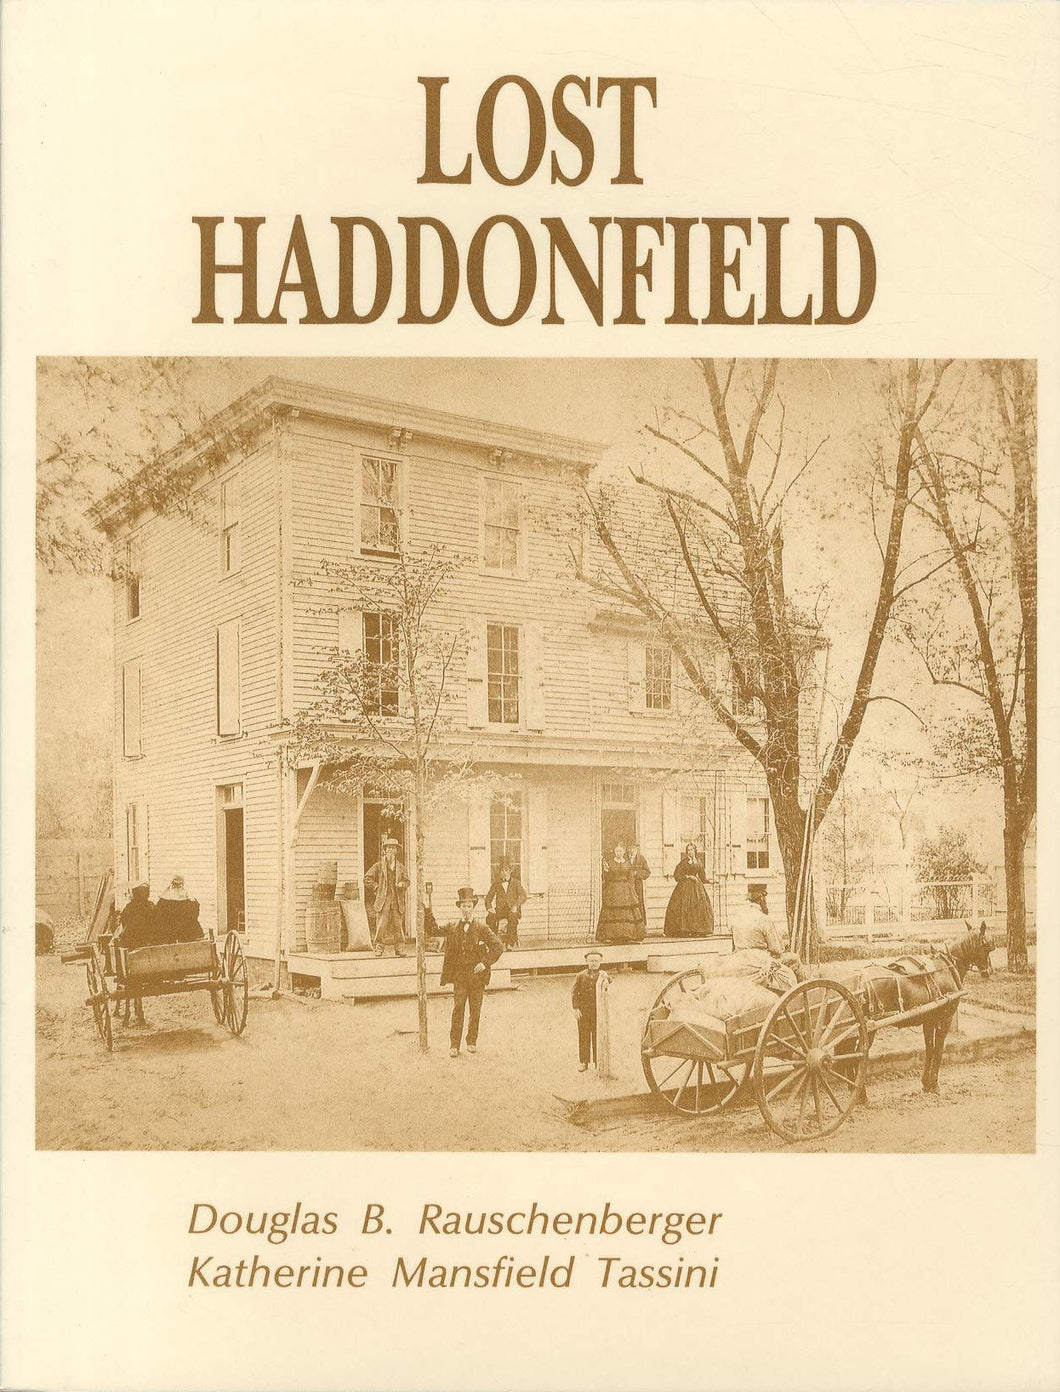 Lost Haddonfield, by Douglas B. Rauschenberger and Katherine M. Tassini